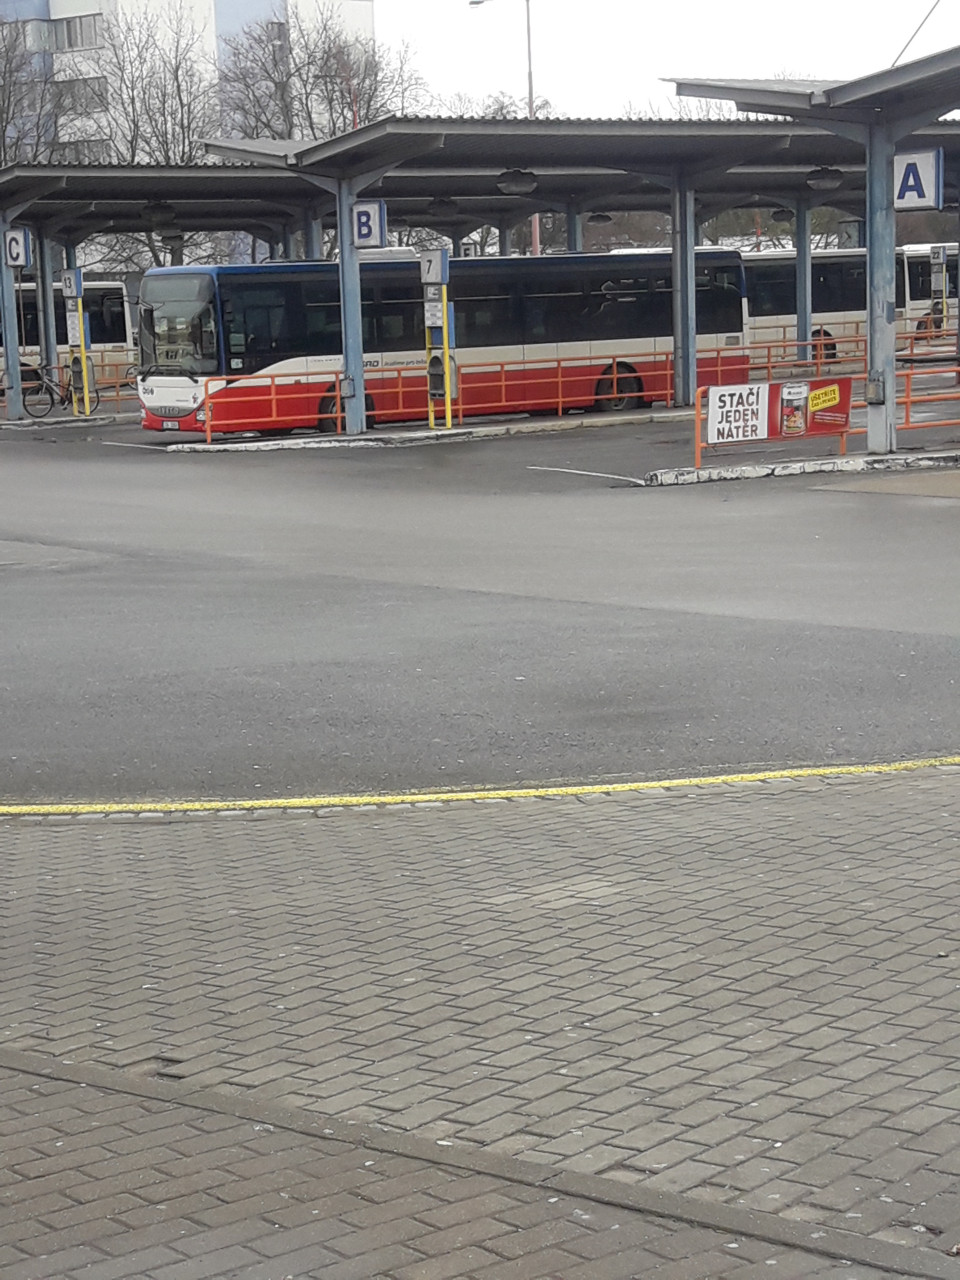 SAD UH m njak nov autobus s PID ntrem... A pitom se mi povedlo vyfotit tmatickou reklamu :D